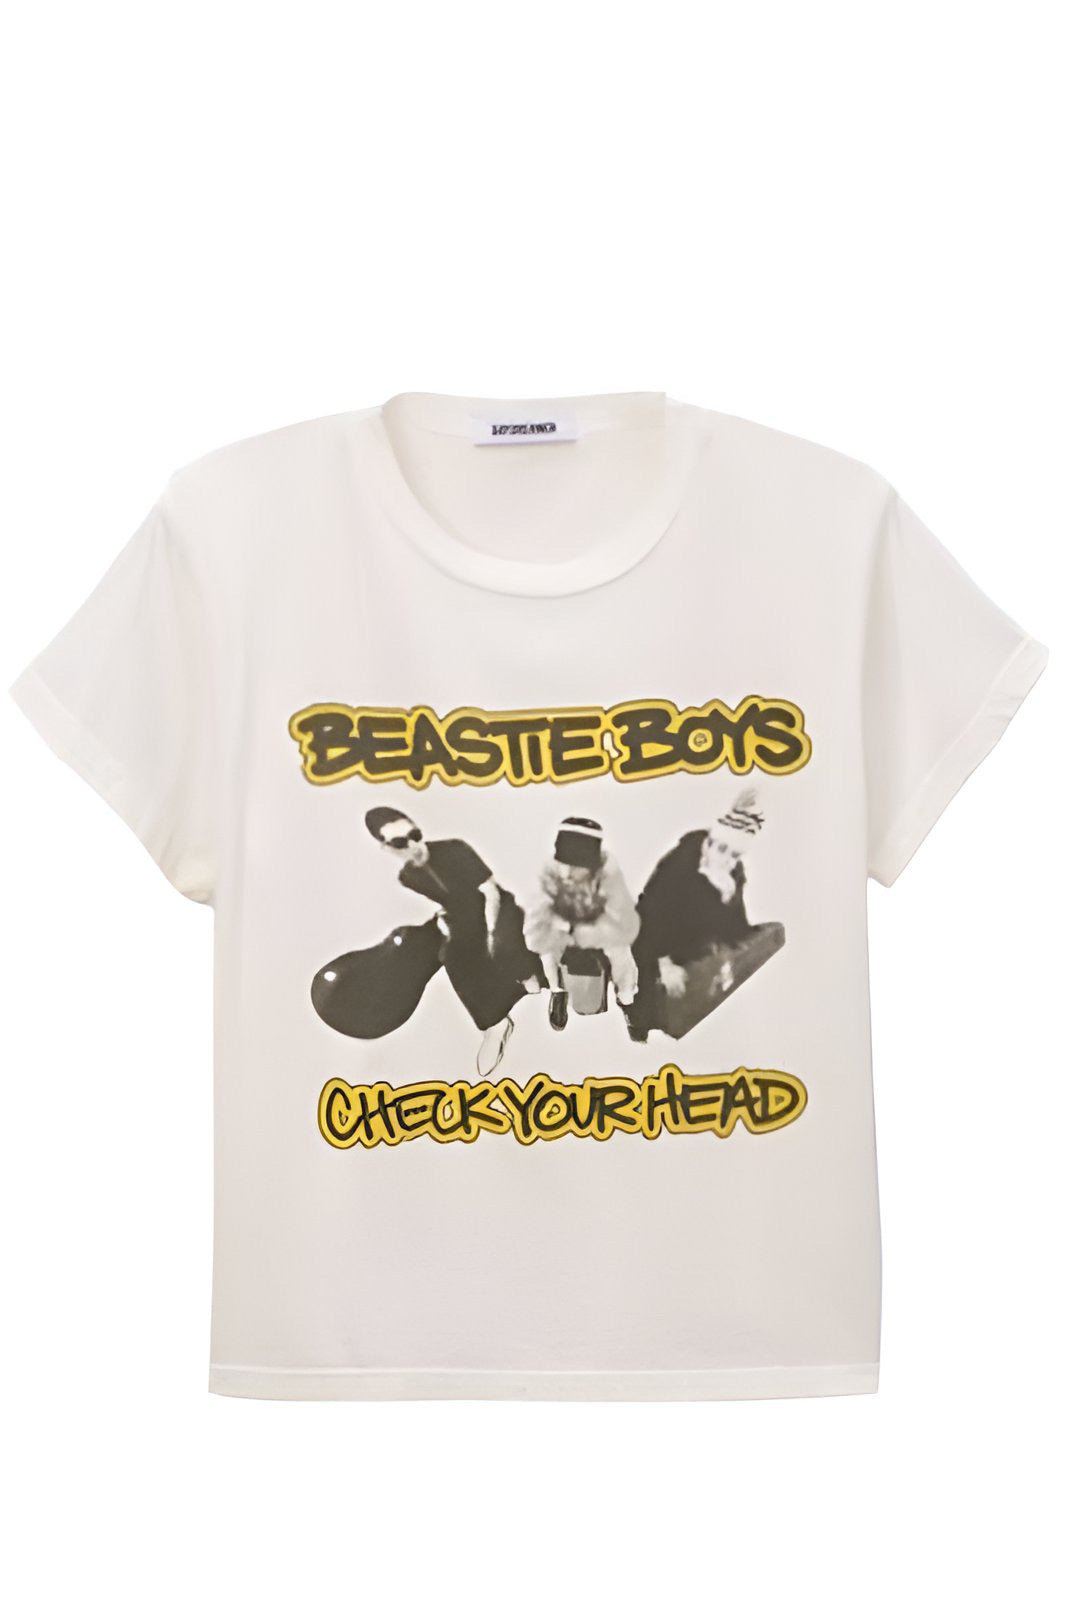 Daydreamer LA - Beastie Boys Check Your Head Solo Tee